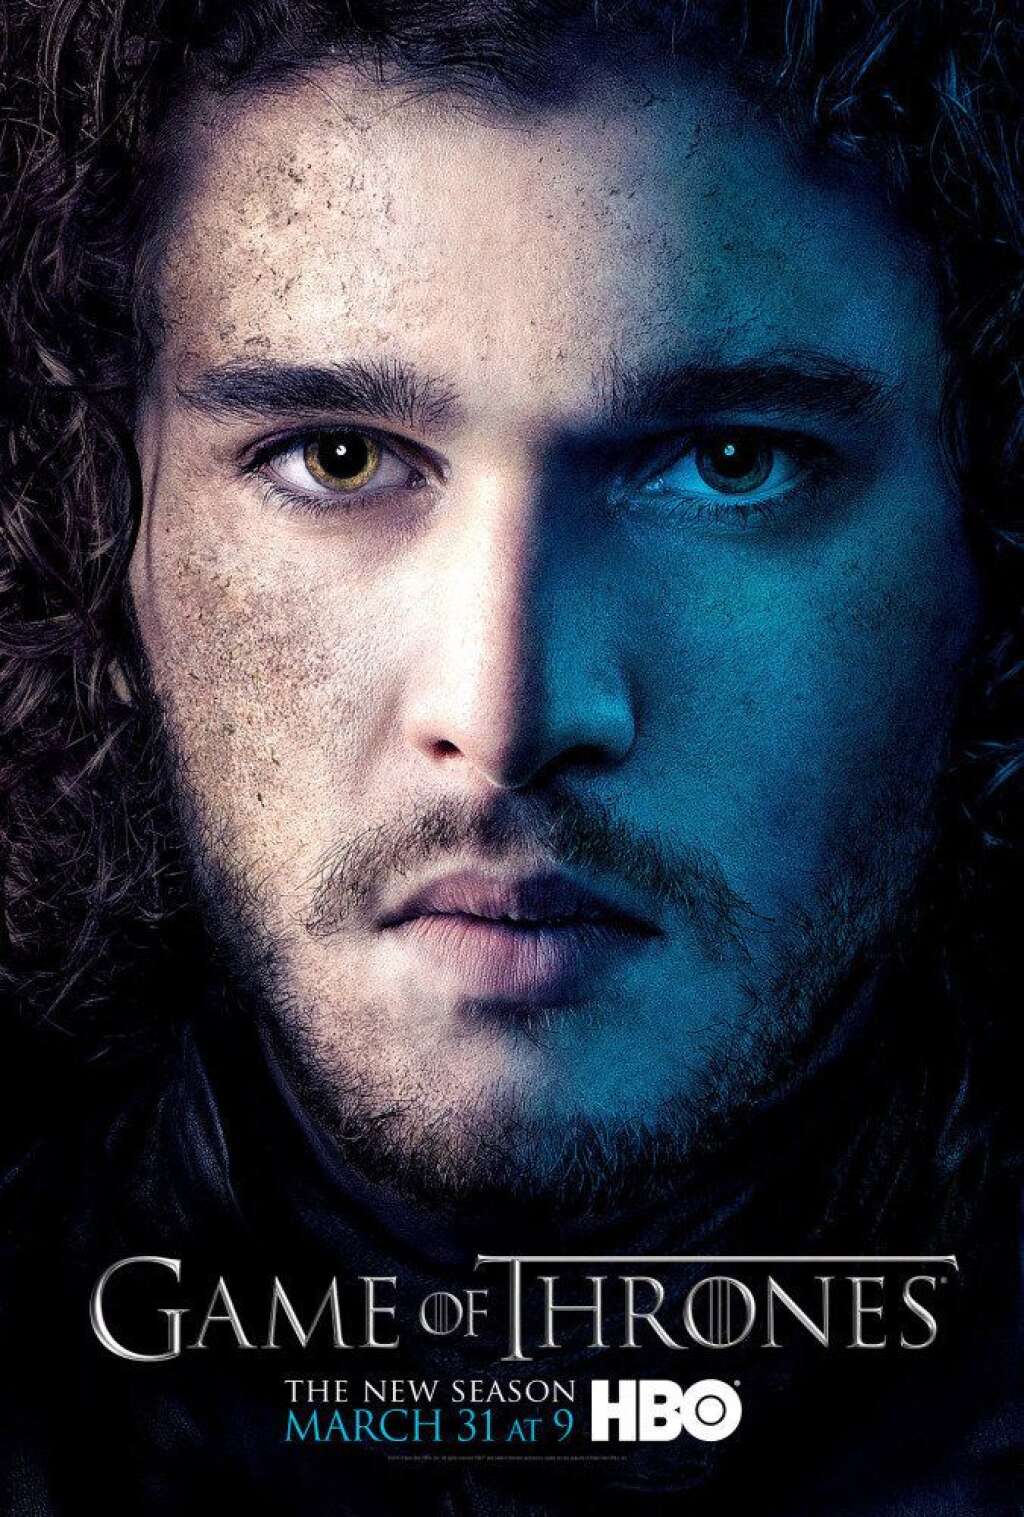 'Game of Thrones' Character Posters - Kit Harington as Jon Stark.